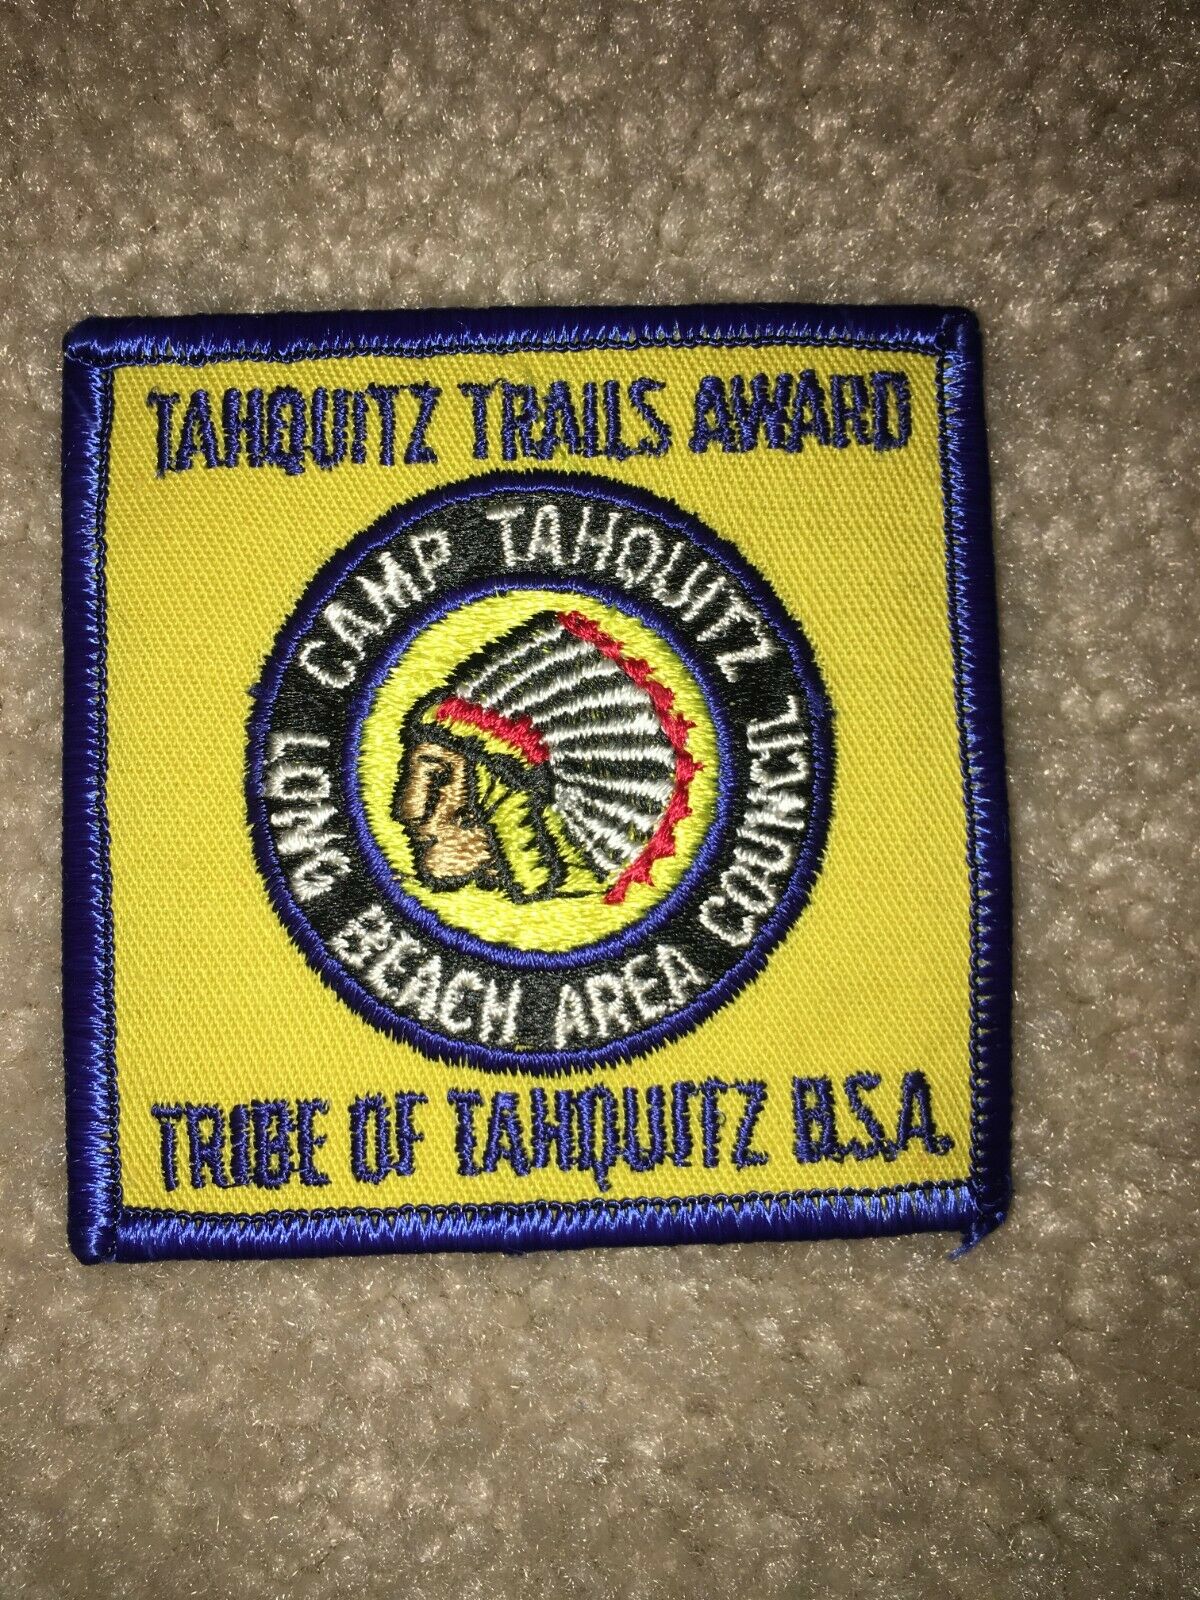 Boy Scout Bsa Camp Tahquitz Trails Award Long Beach Area Council Ca Trail Patch